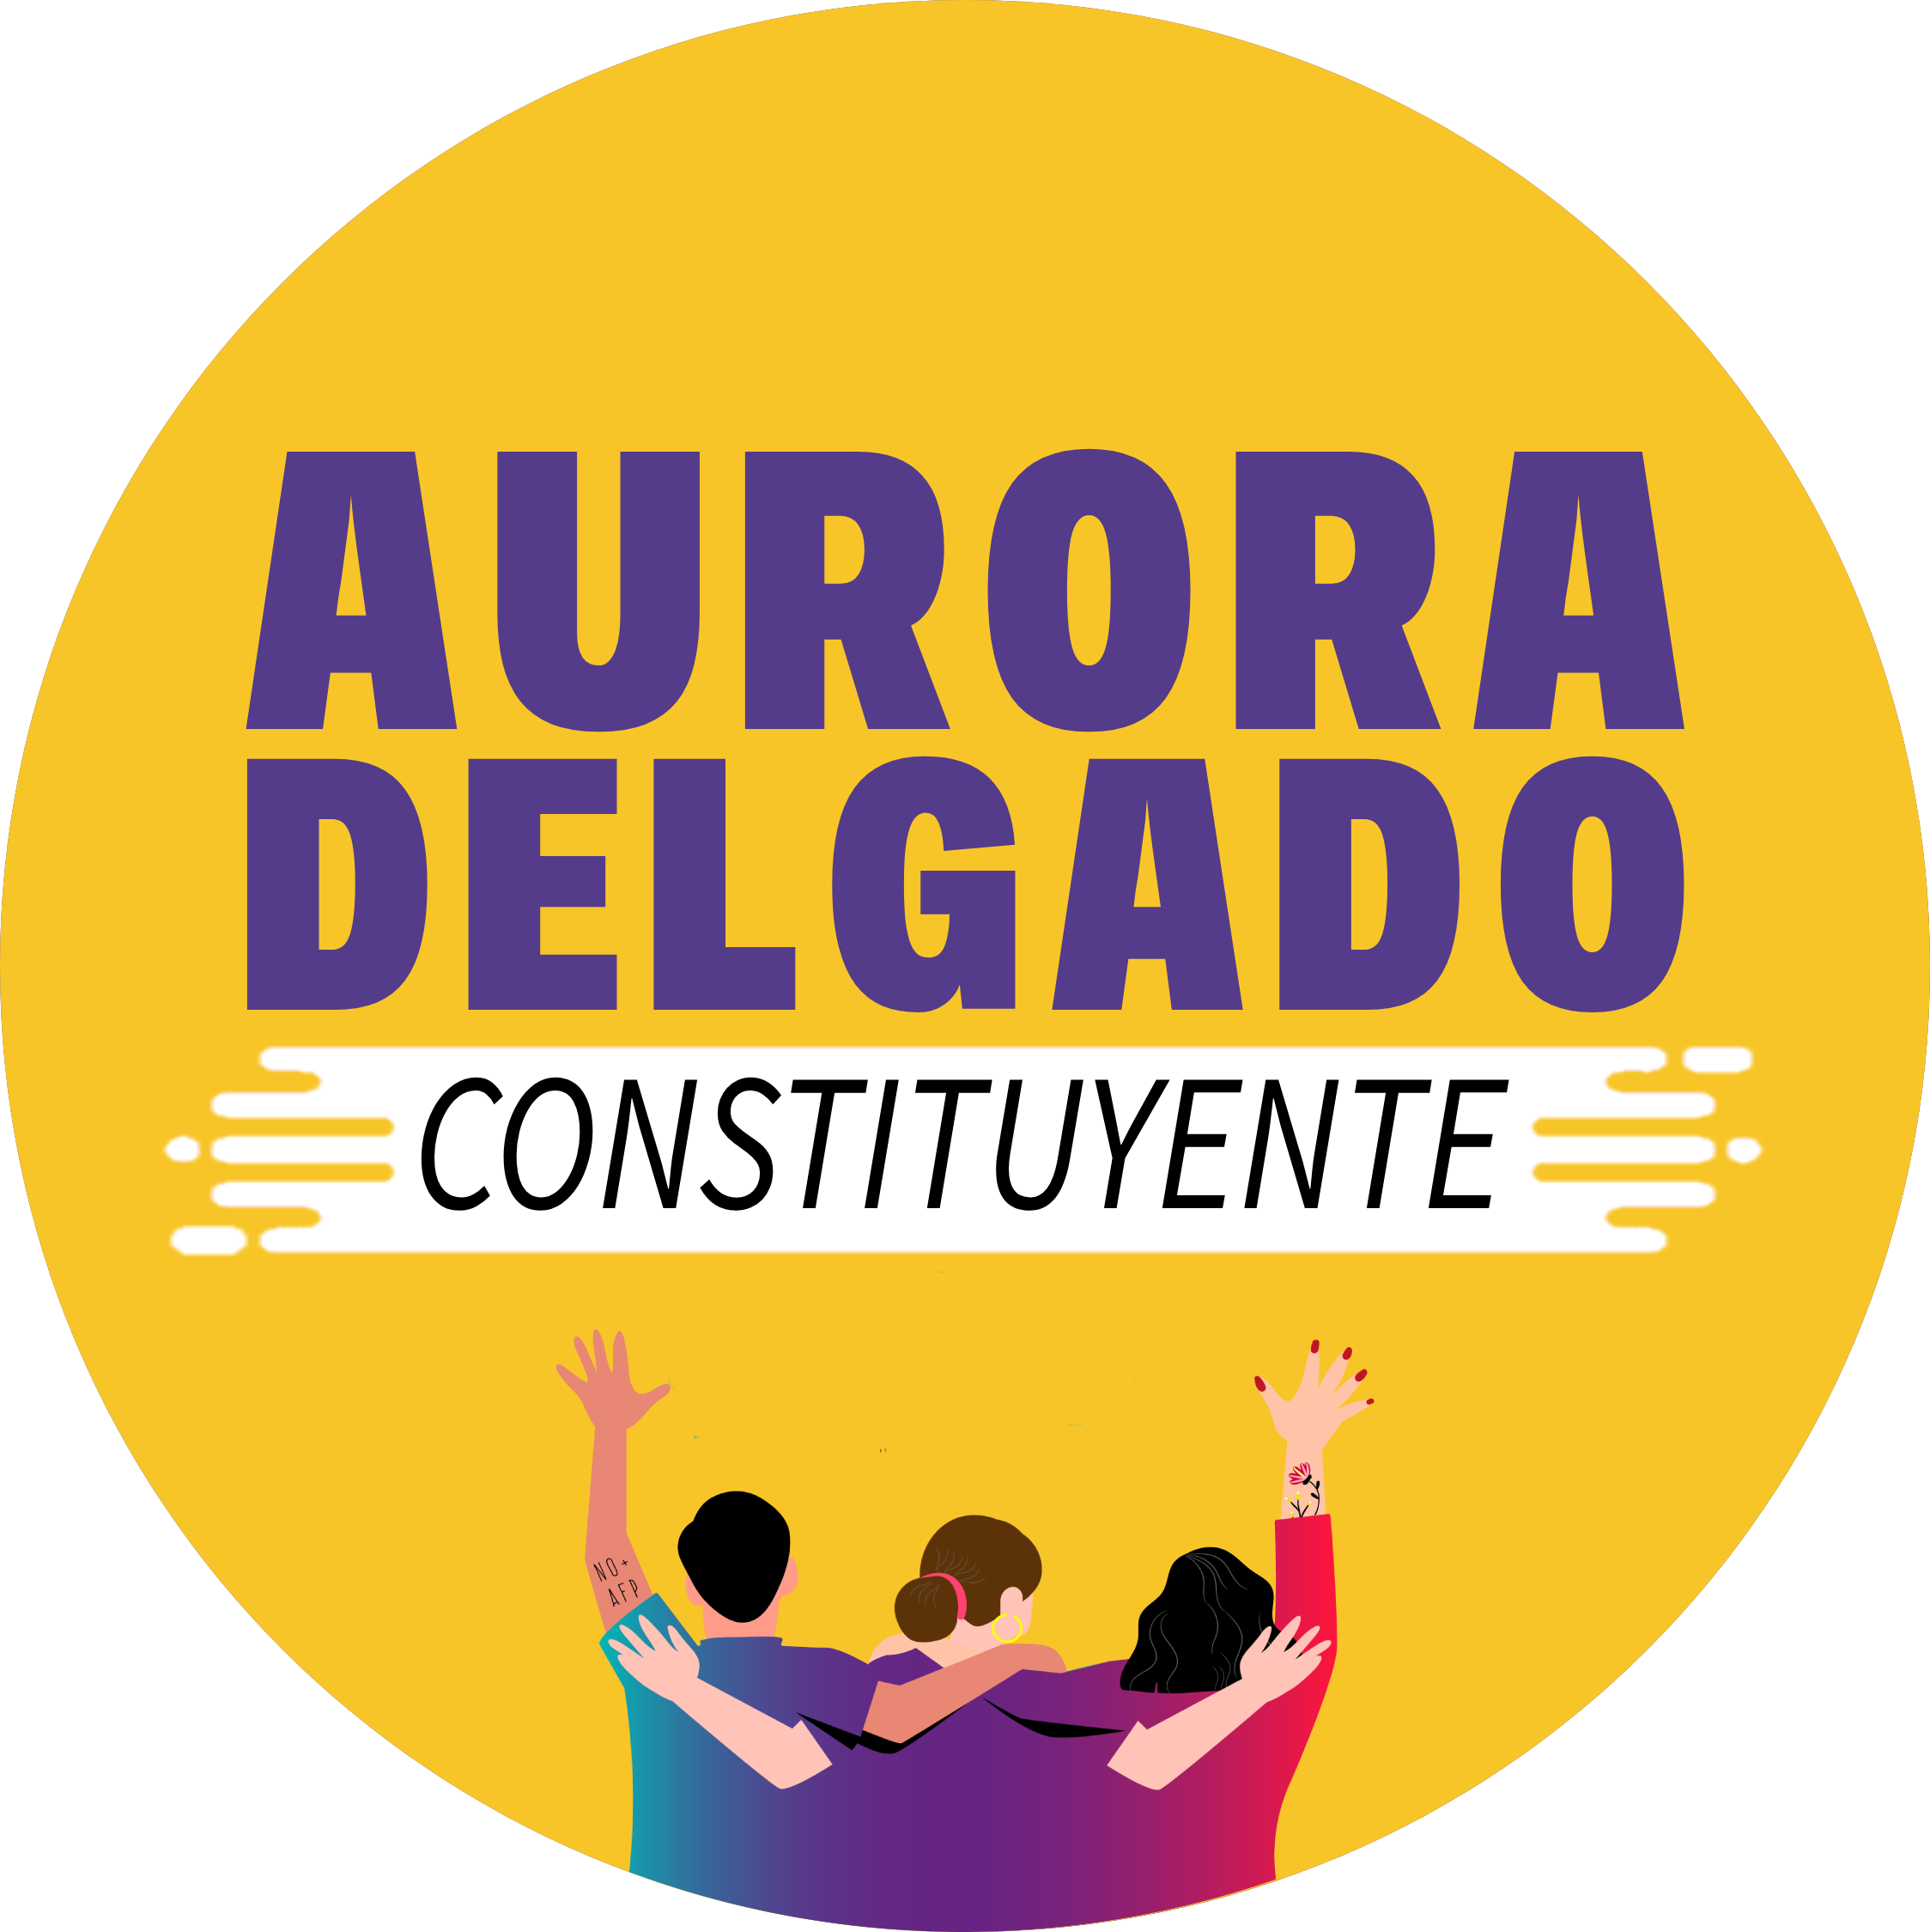 Aurora Delgado Constituyente